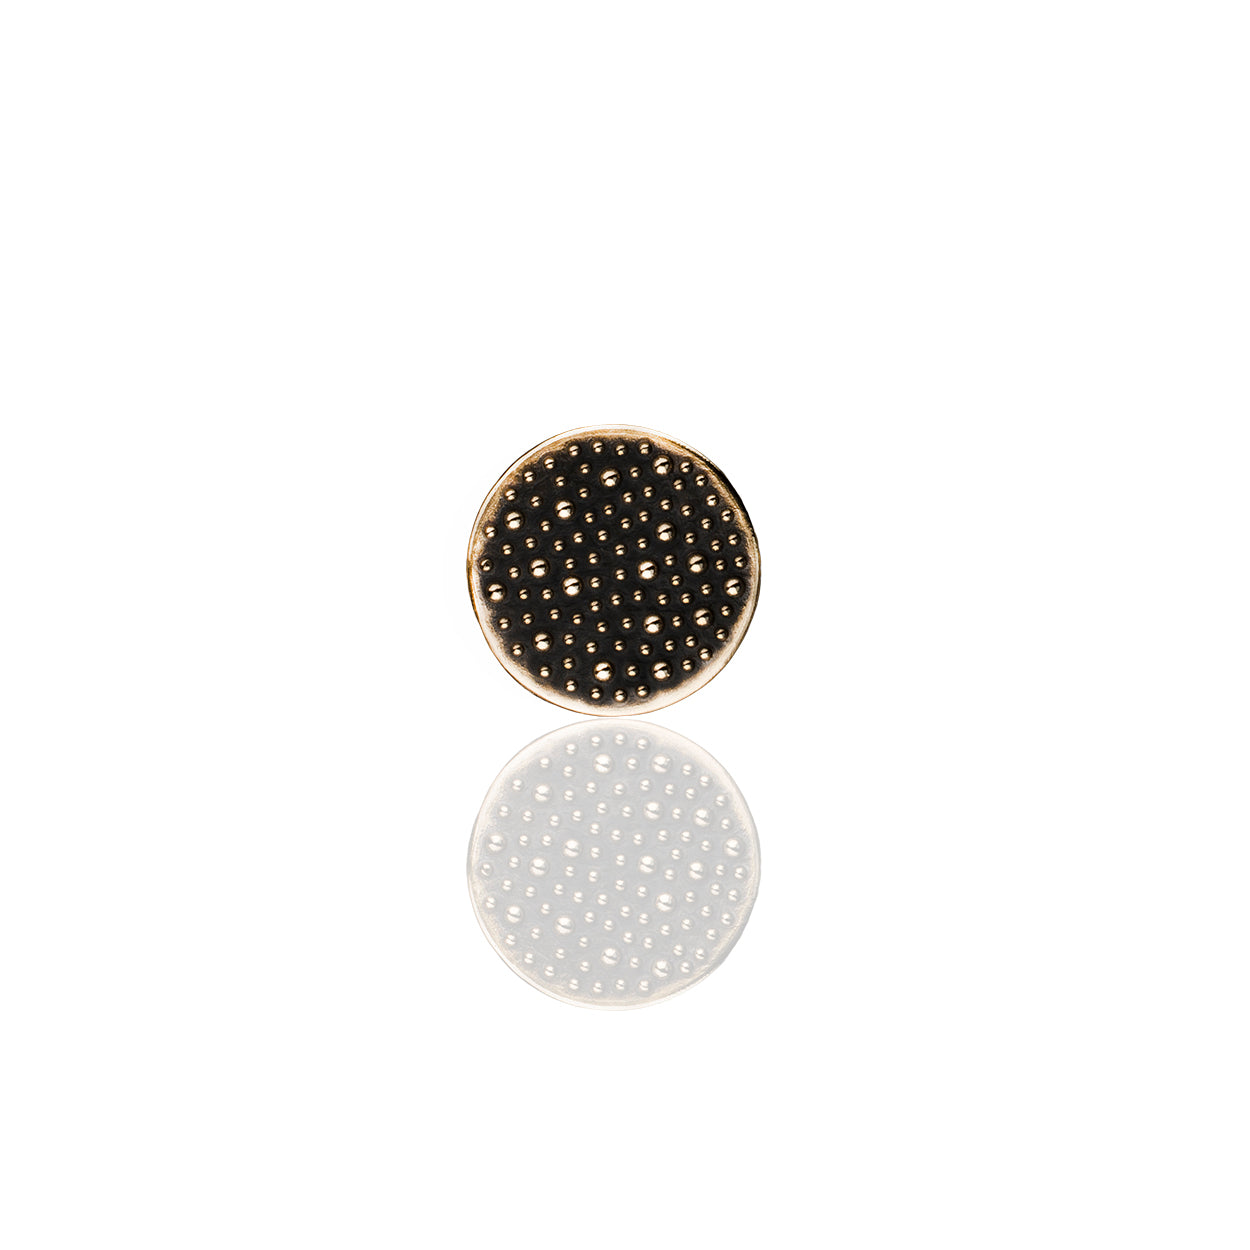 Jewelry for Yarn - Bronze Button for Fiber Arts Lifestyle - Demi-Sec Button